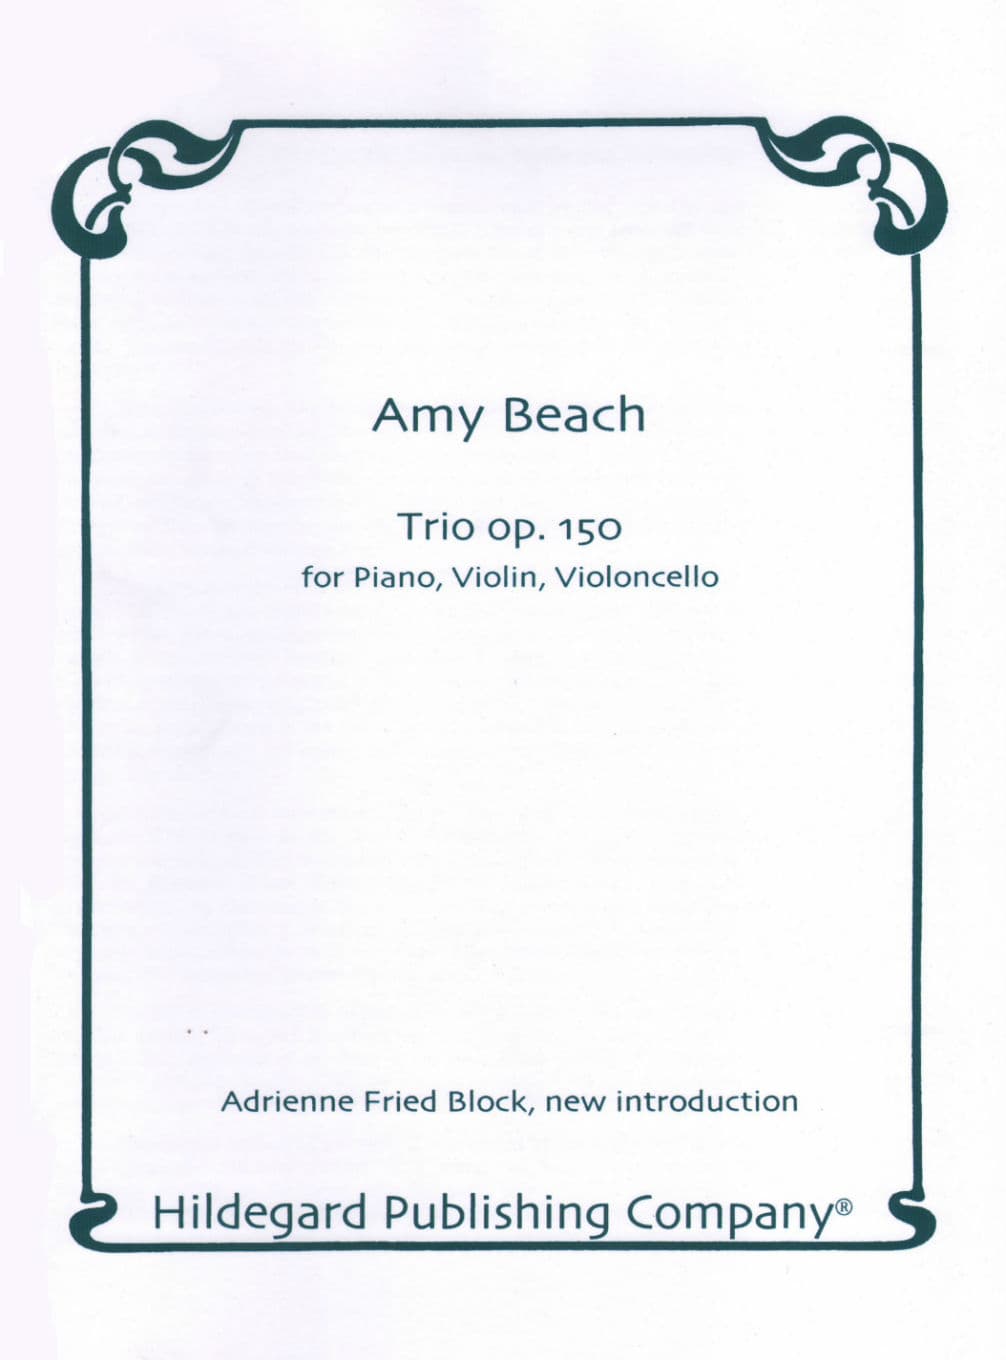 Beach, Amy - Piano Trio Op 150 for Violin, Cello and Piano - Hildegard Publication